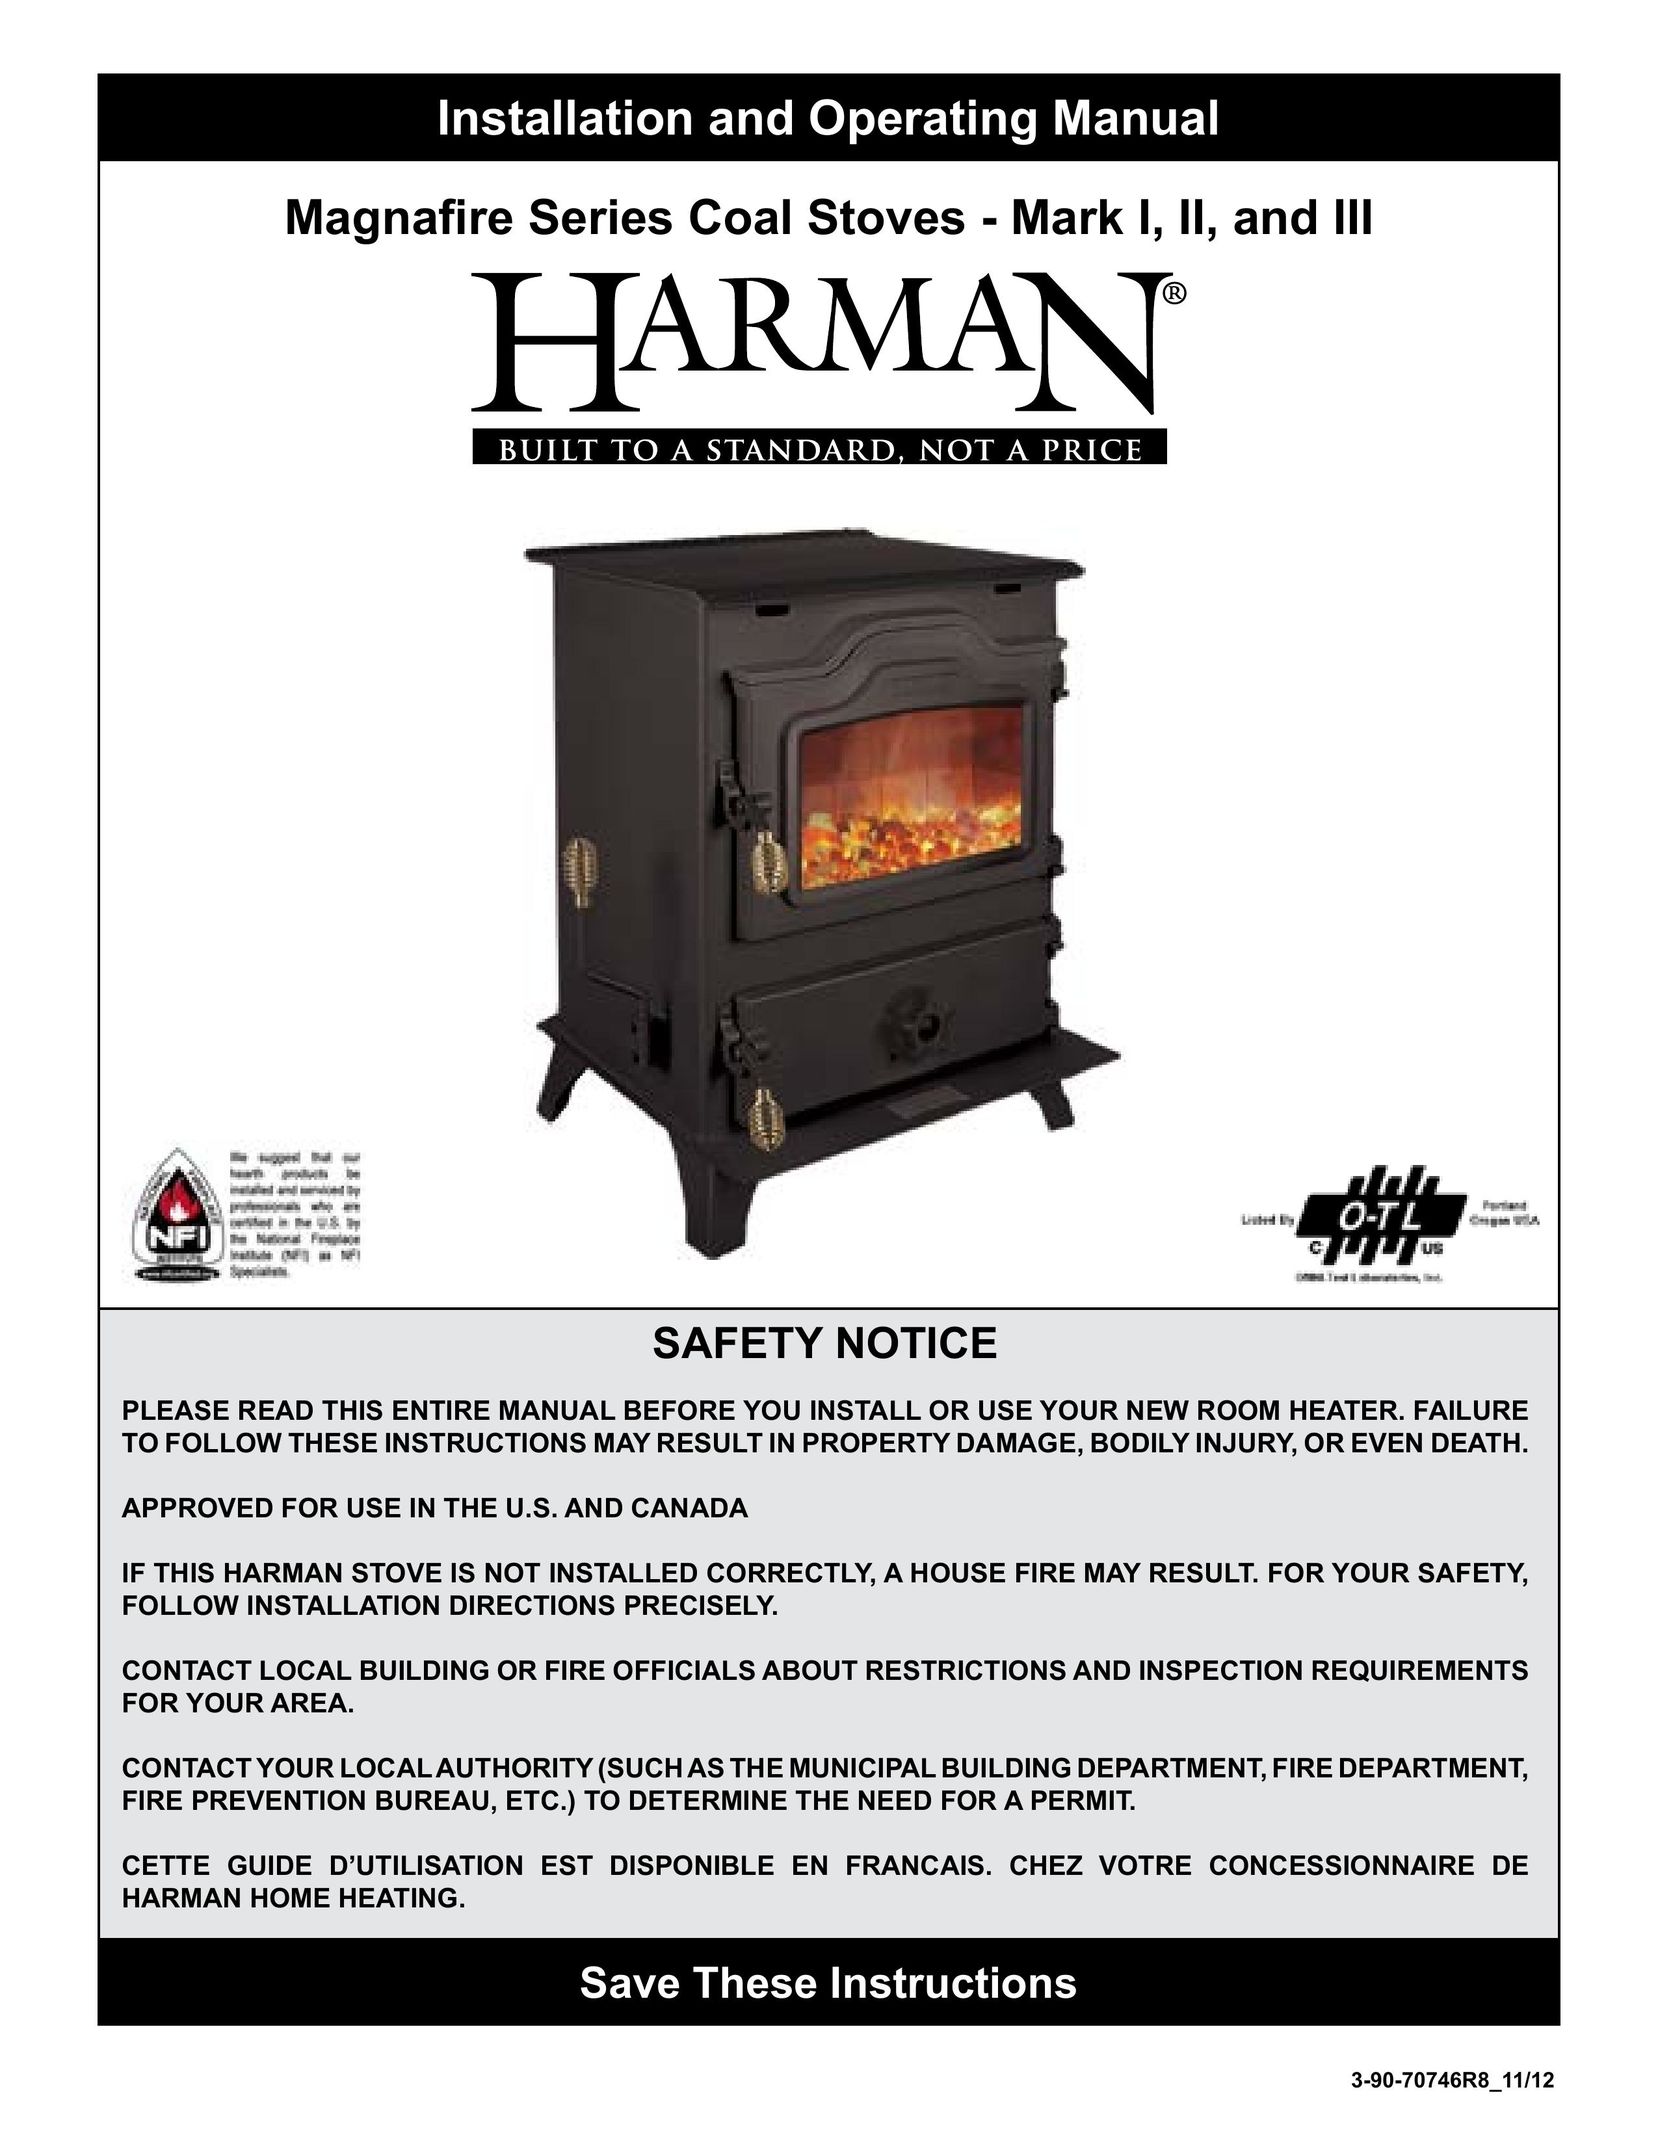 Harman Stove Company Mark III Oven User Manual